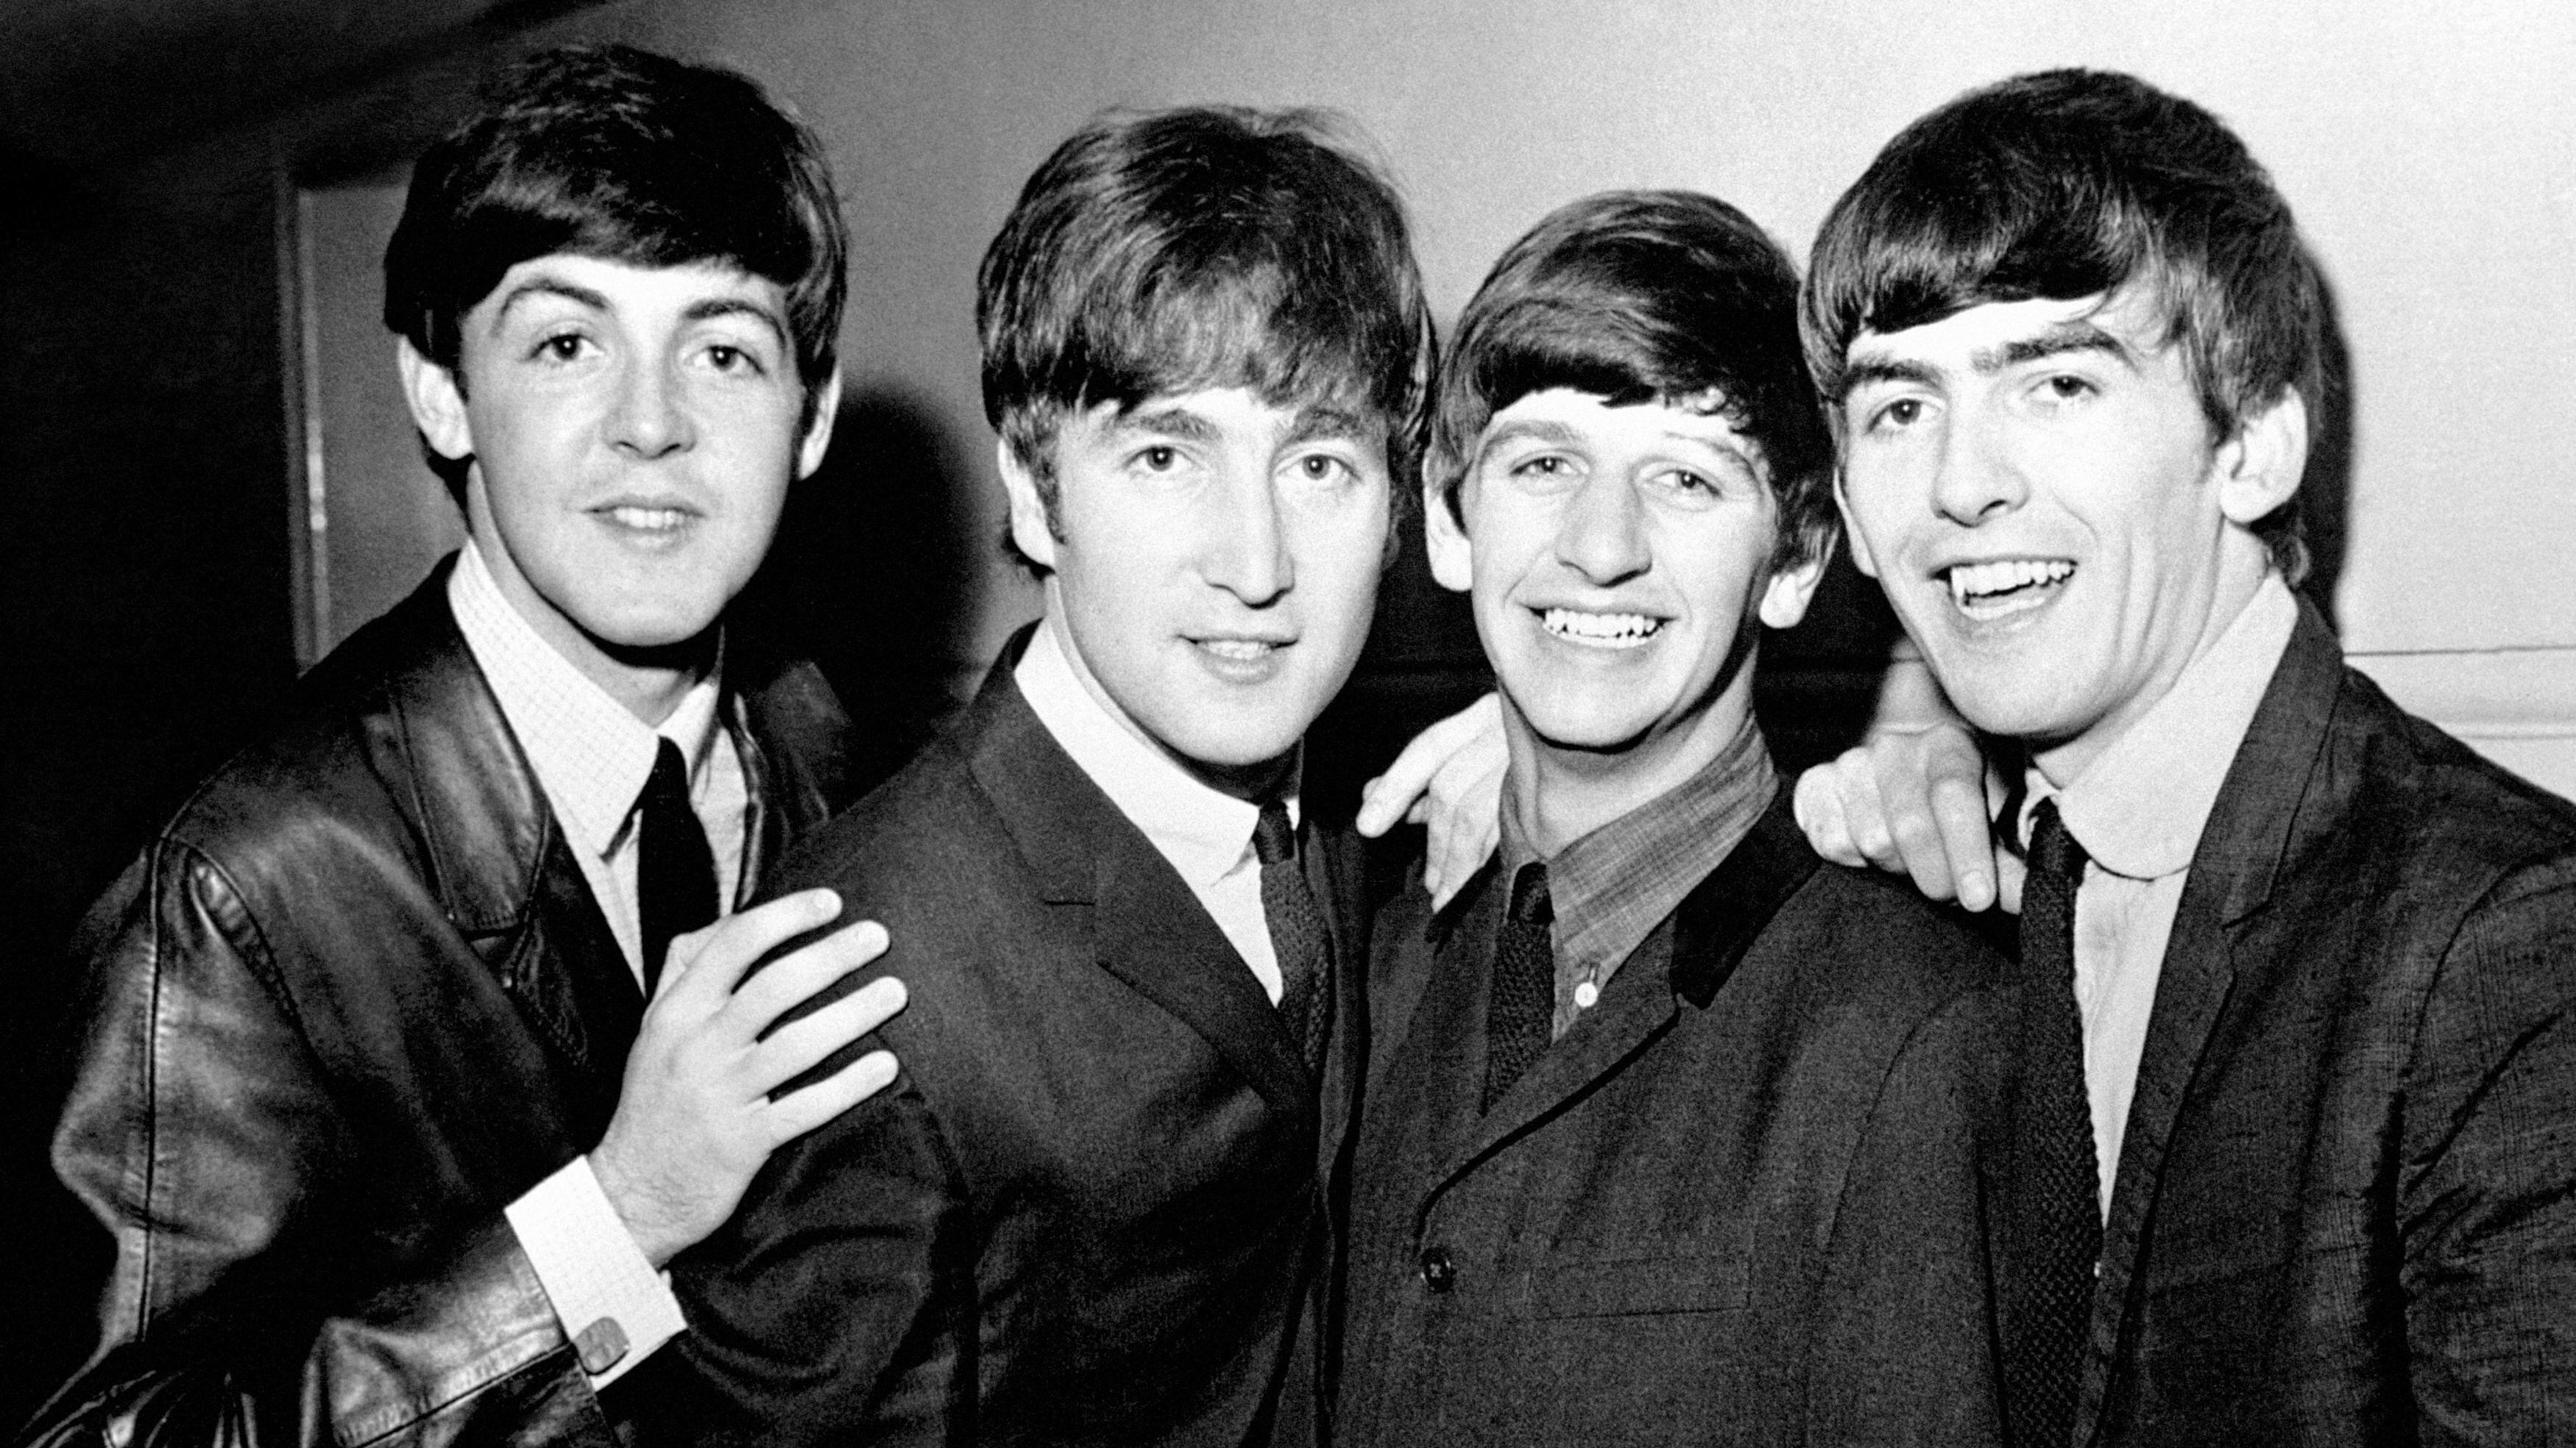 John Lennon guitar found in attic breaks ‘world record’ at auction